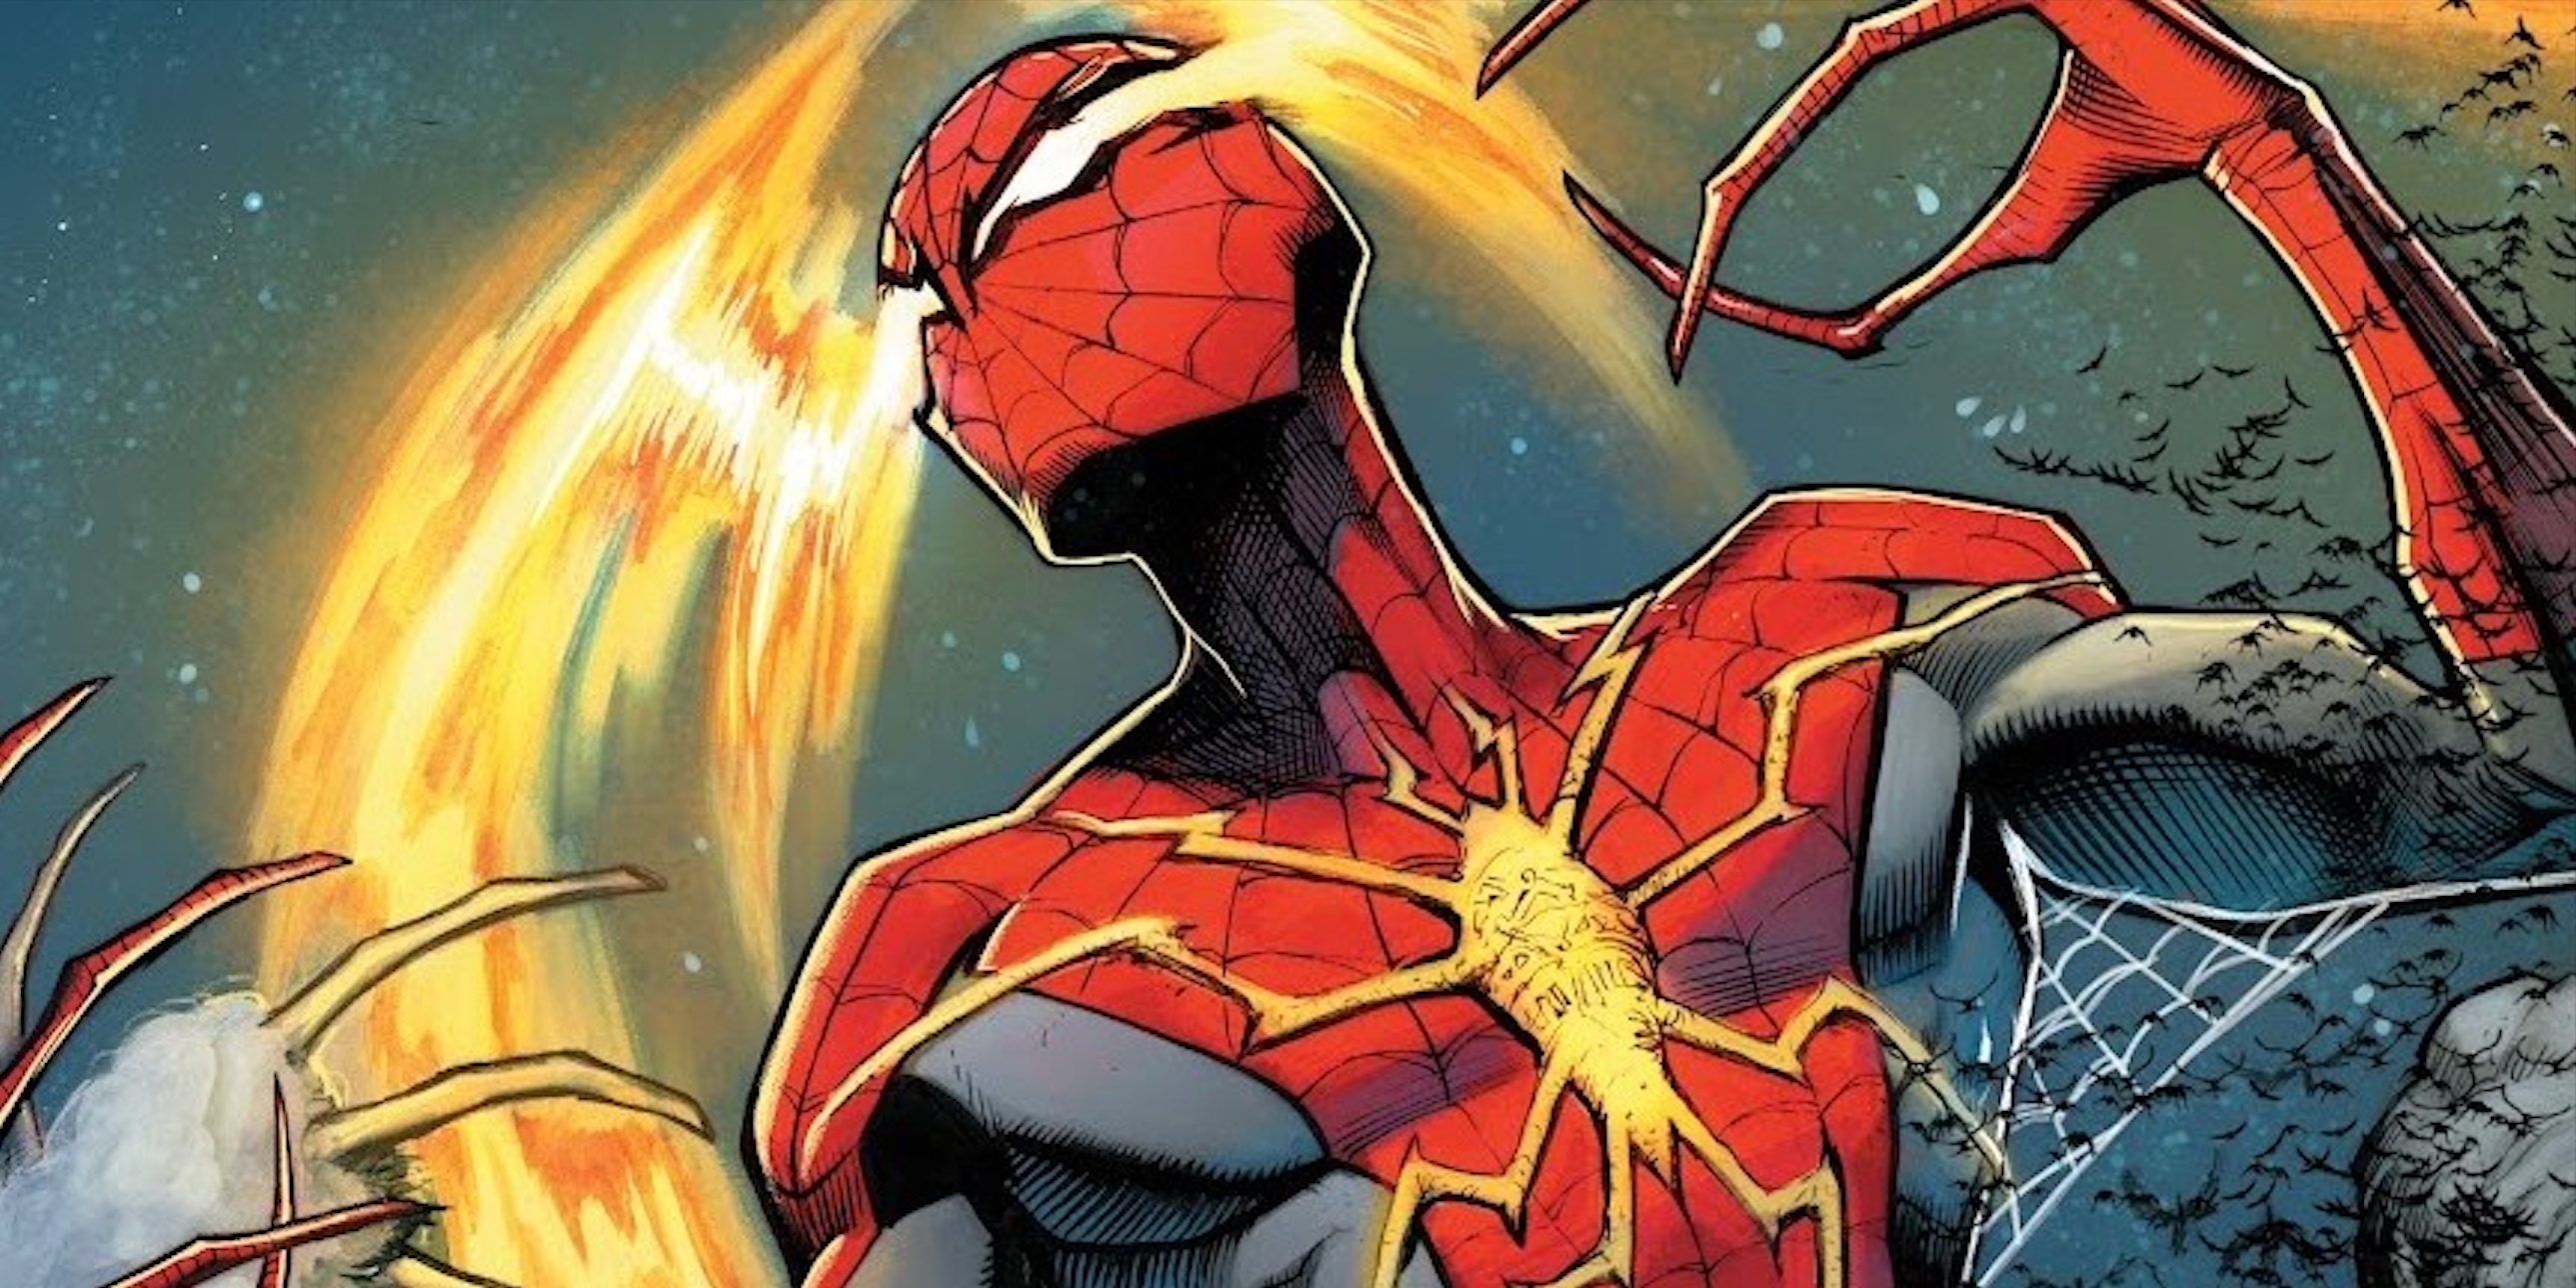 Spider-Man in Deadly Neighborhood's transformation